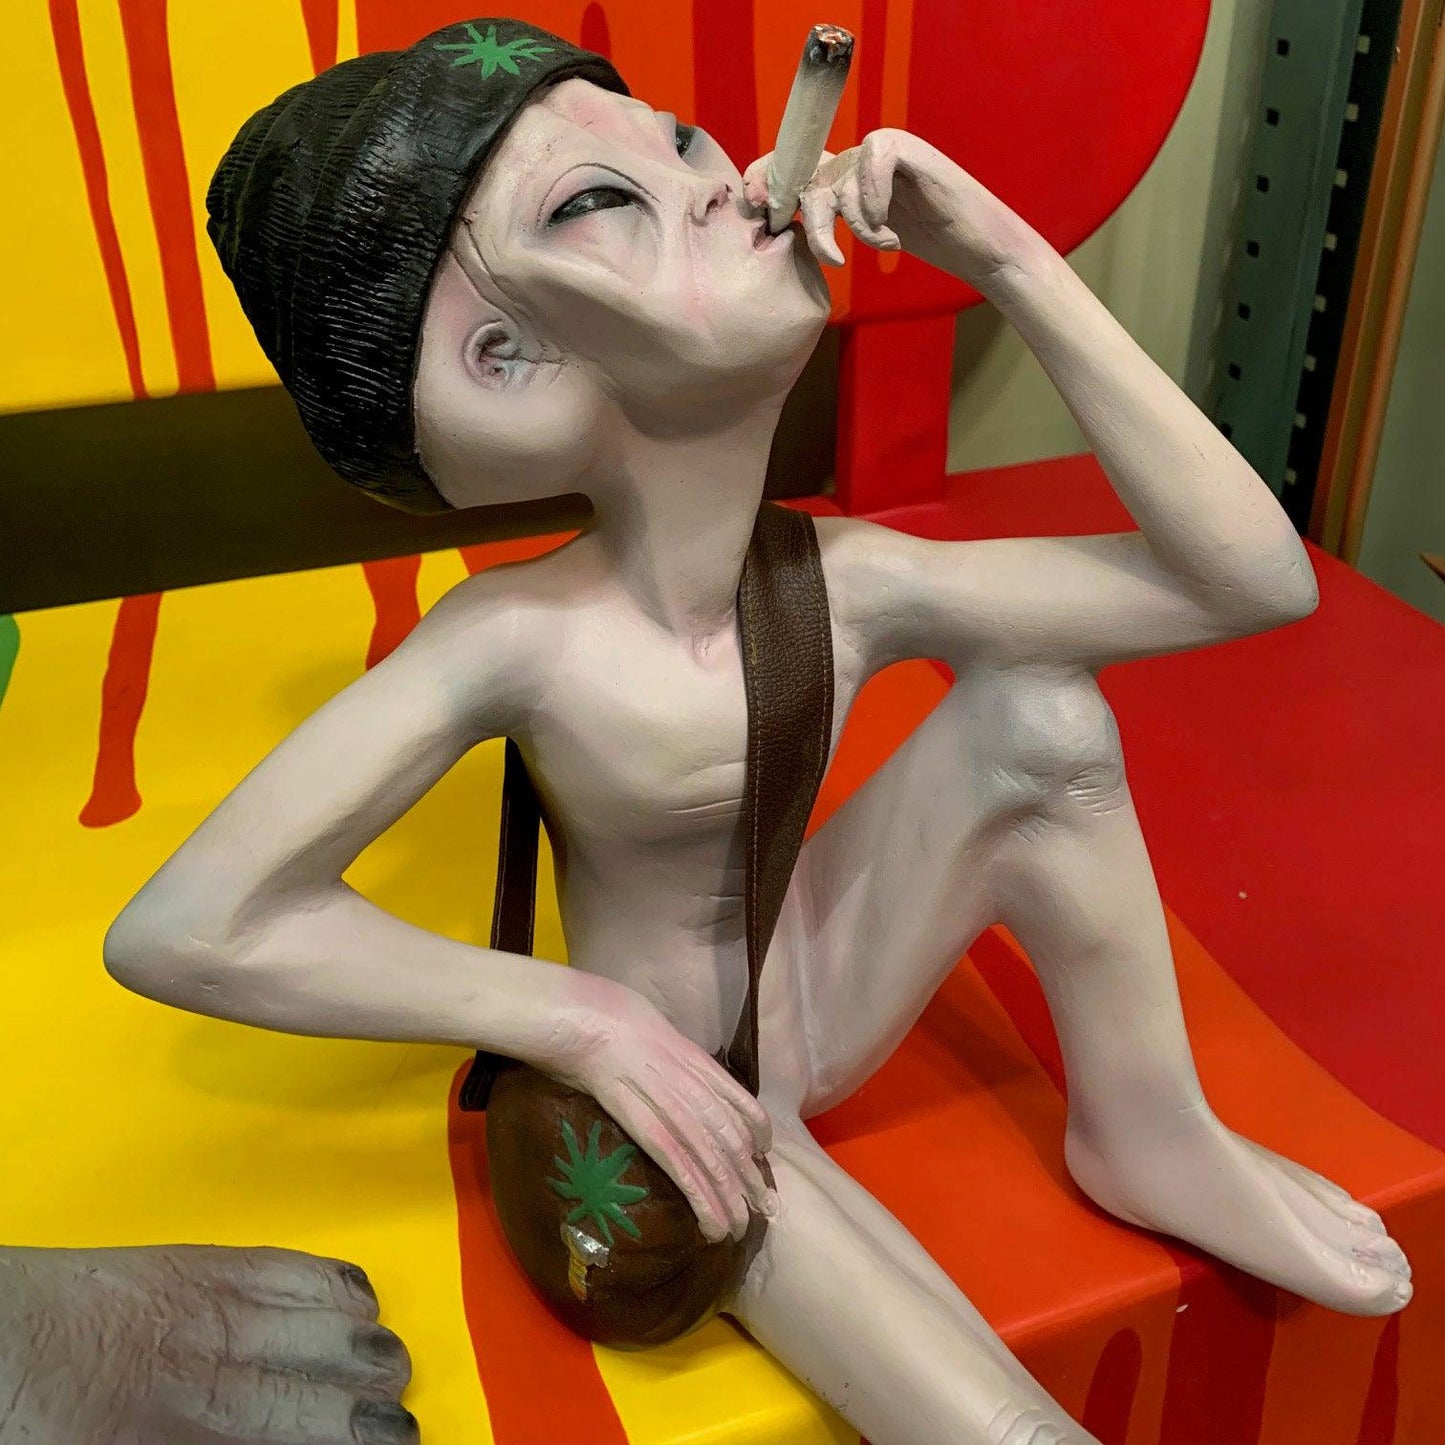 Smoking Alien sitting Life Size Statue - LM Treasures Prop Rentals 